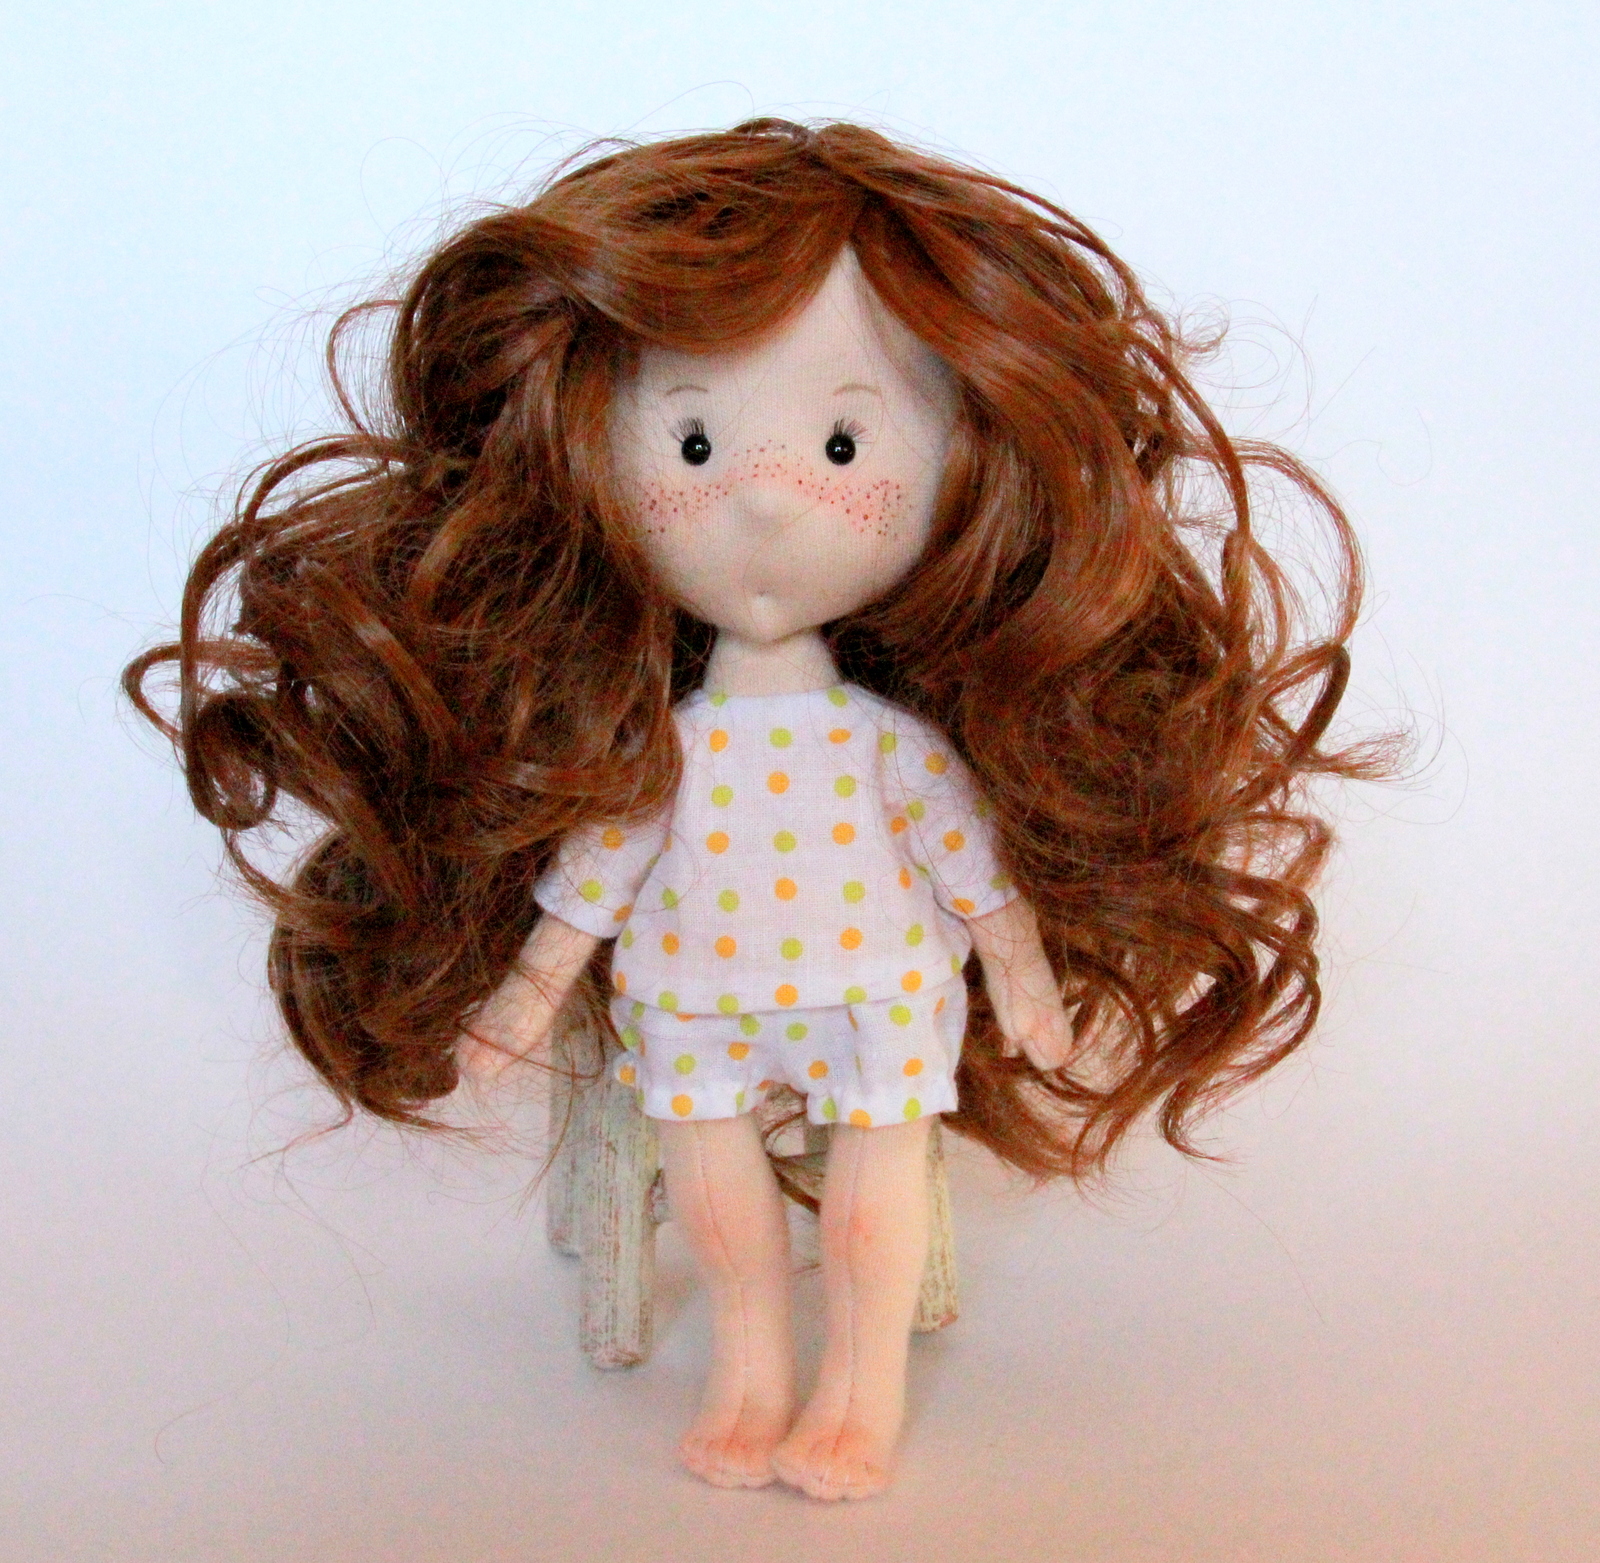 Non-strawberry) - My, Doll, Needlework without process, Needlemen, Textile doll, Longpost